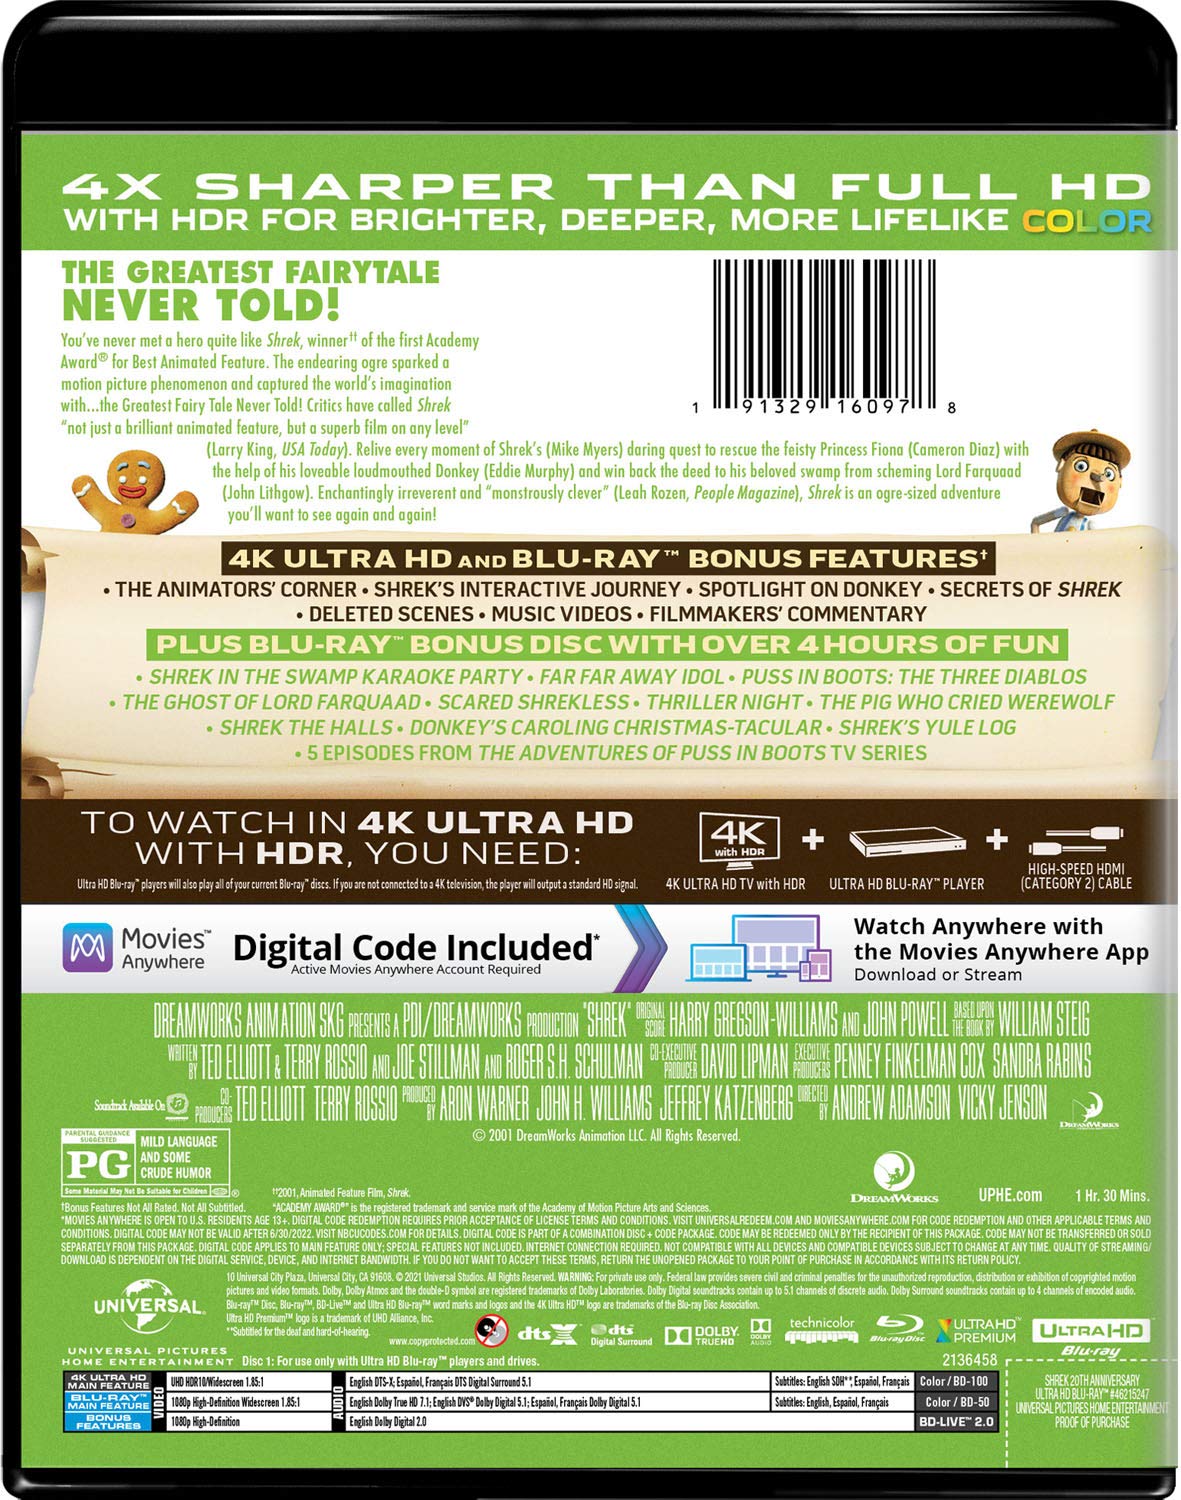 Shrek 4k Blu-ray 20th Anniversary back